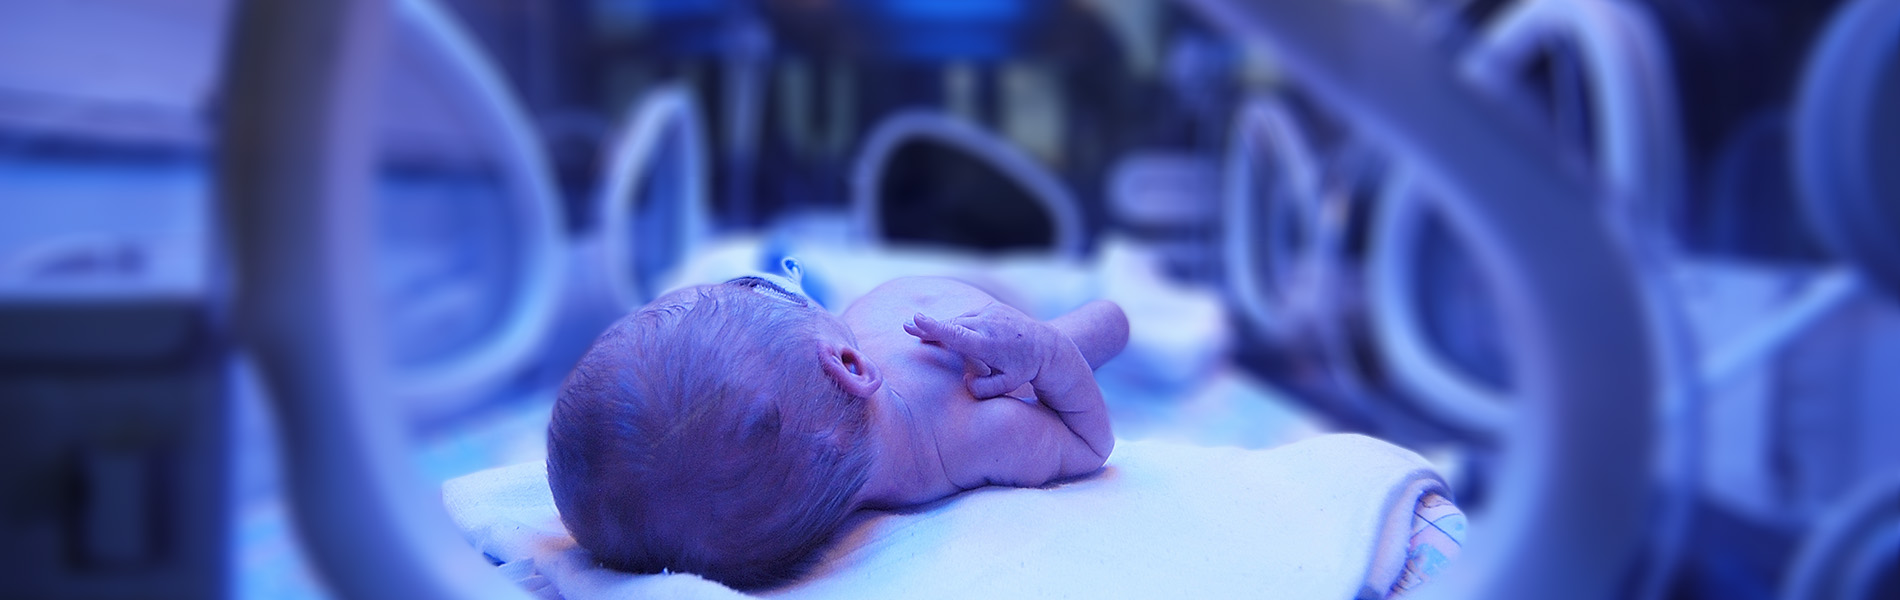 sick newborn baby in the neonatal intensive care unit